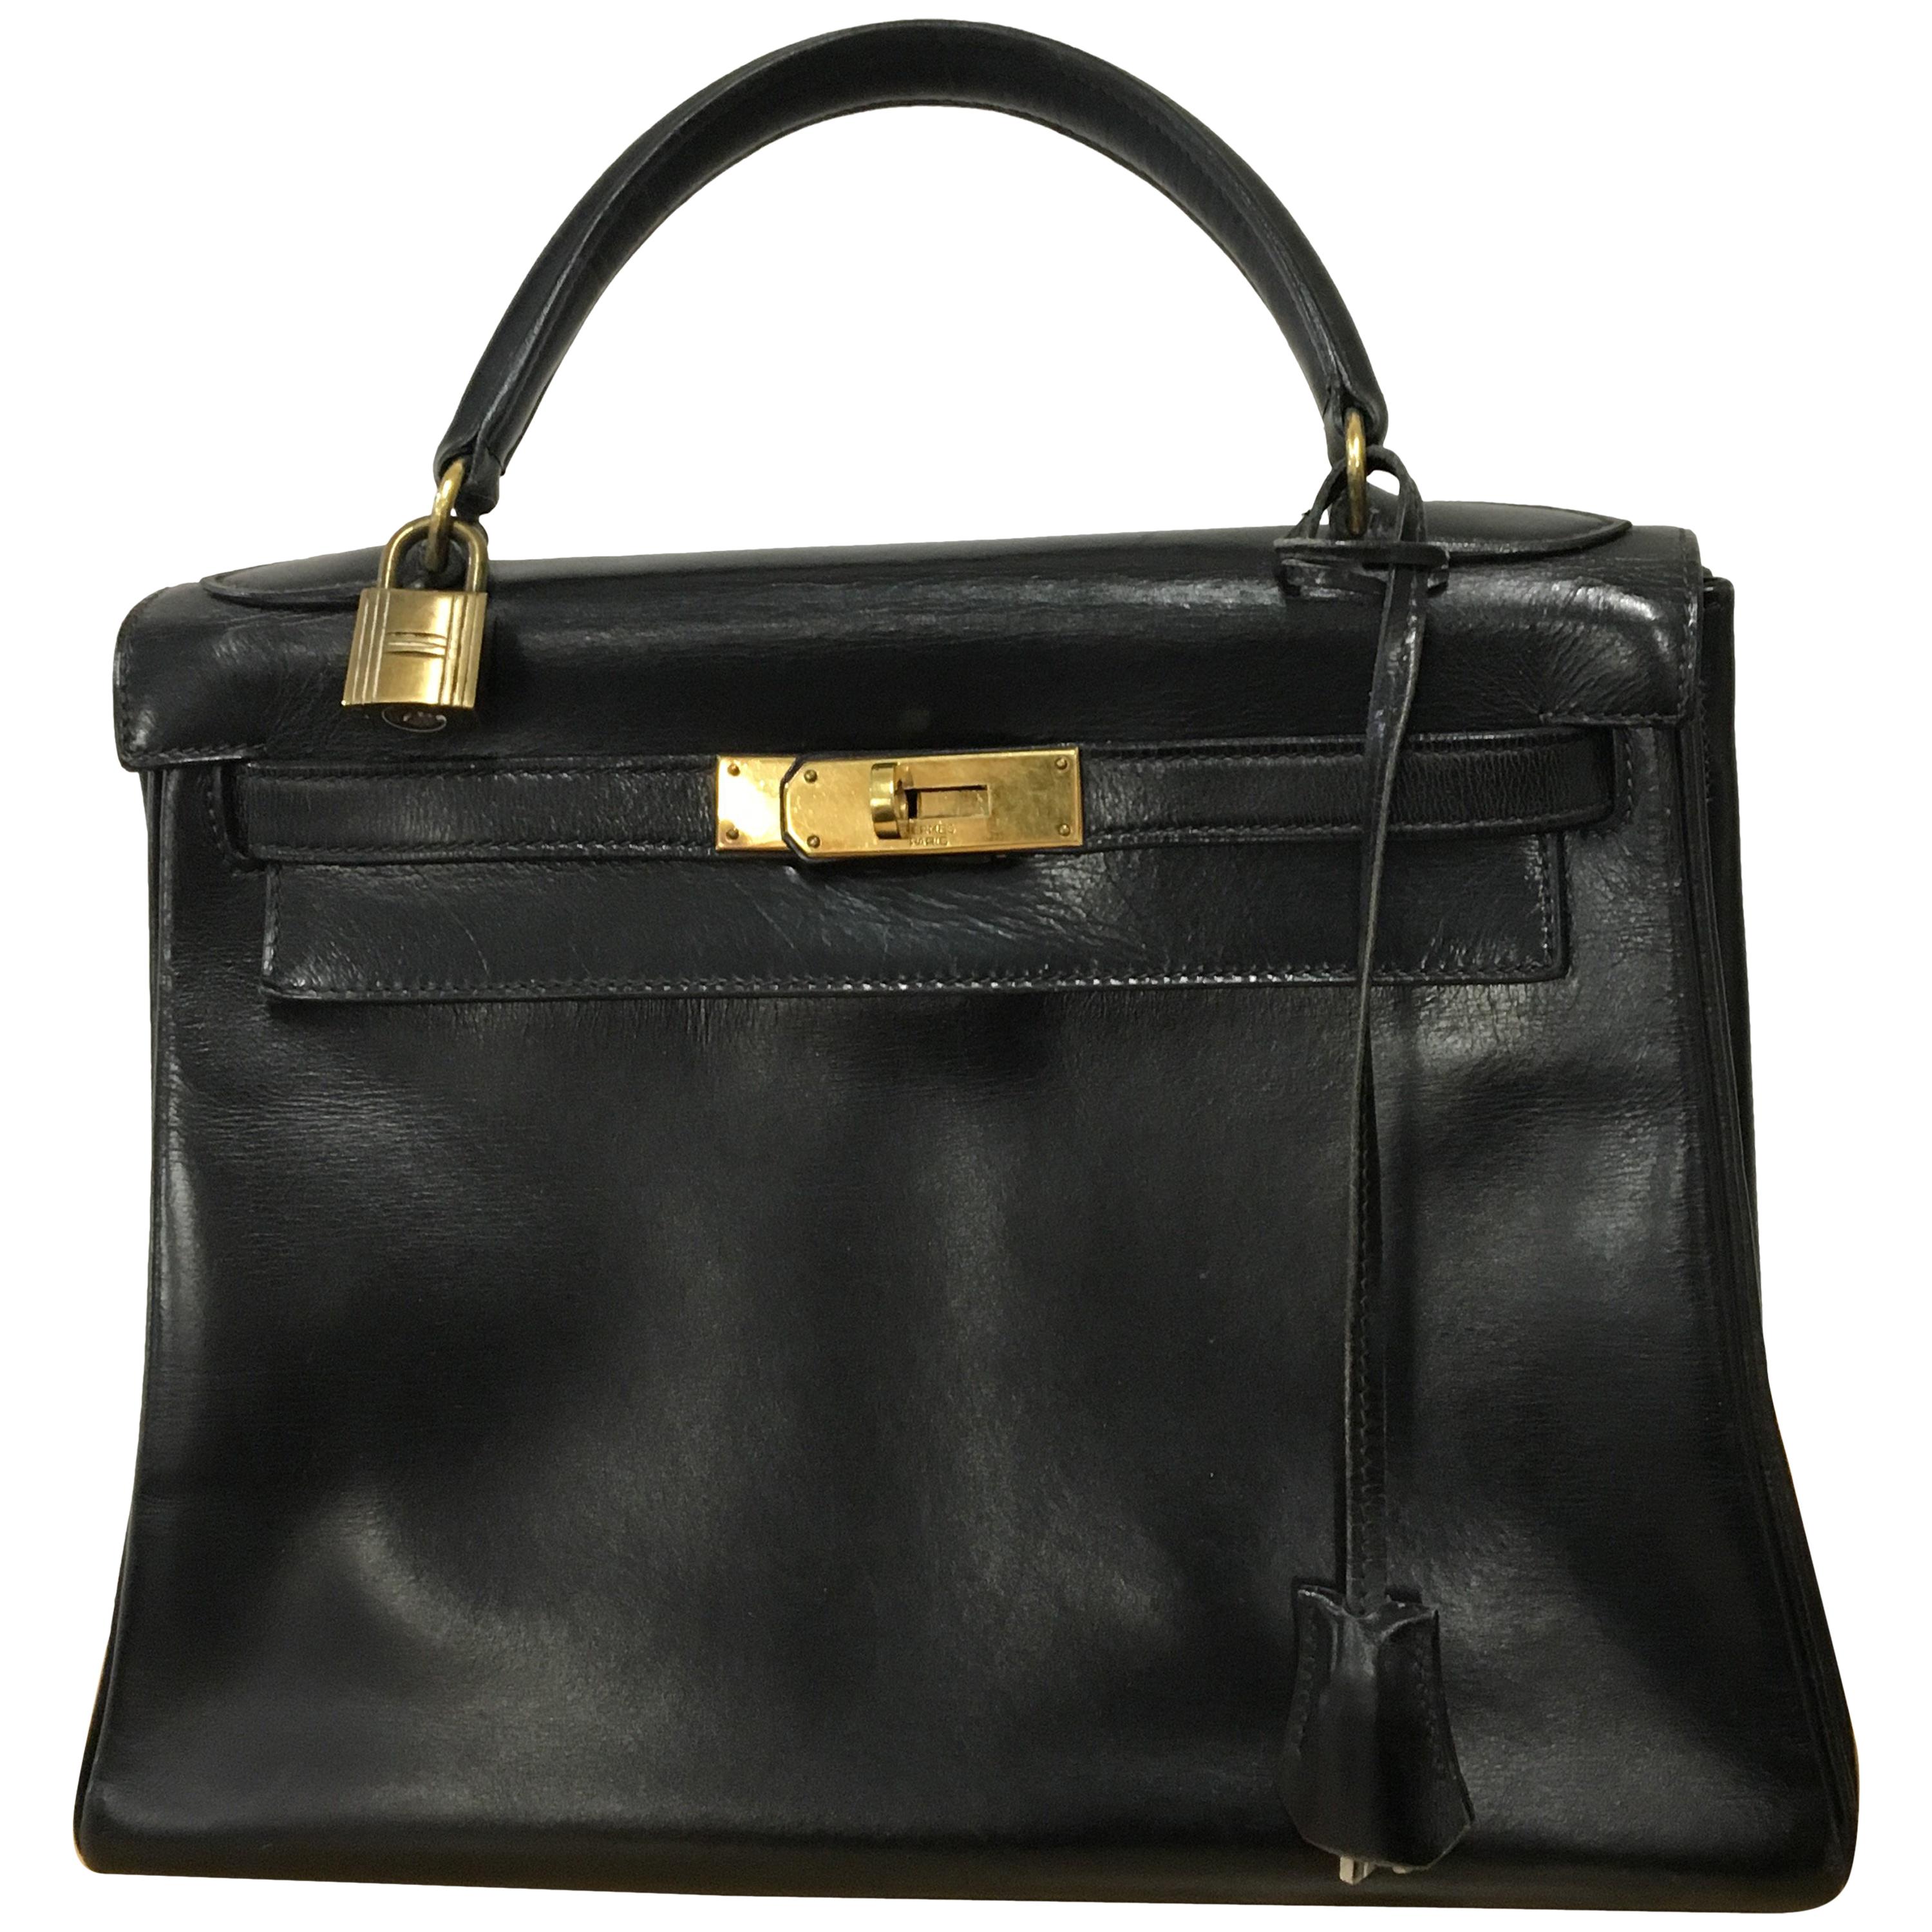 My wife's birth gift, 1949 Hermes Sac a Depeches “Kelly” bag : r/handbags